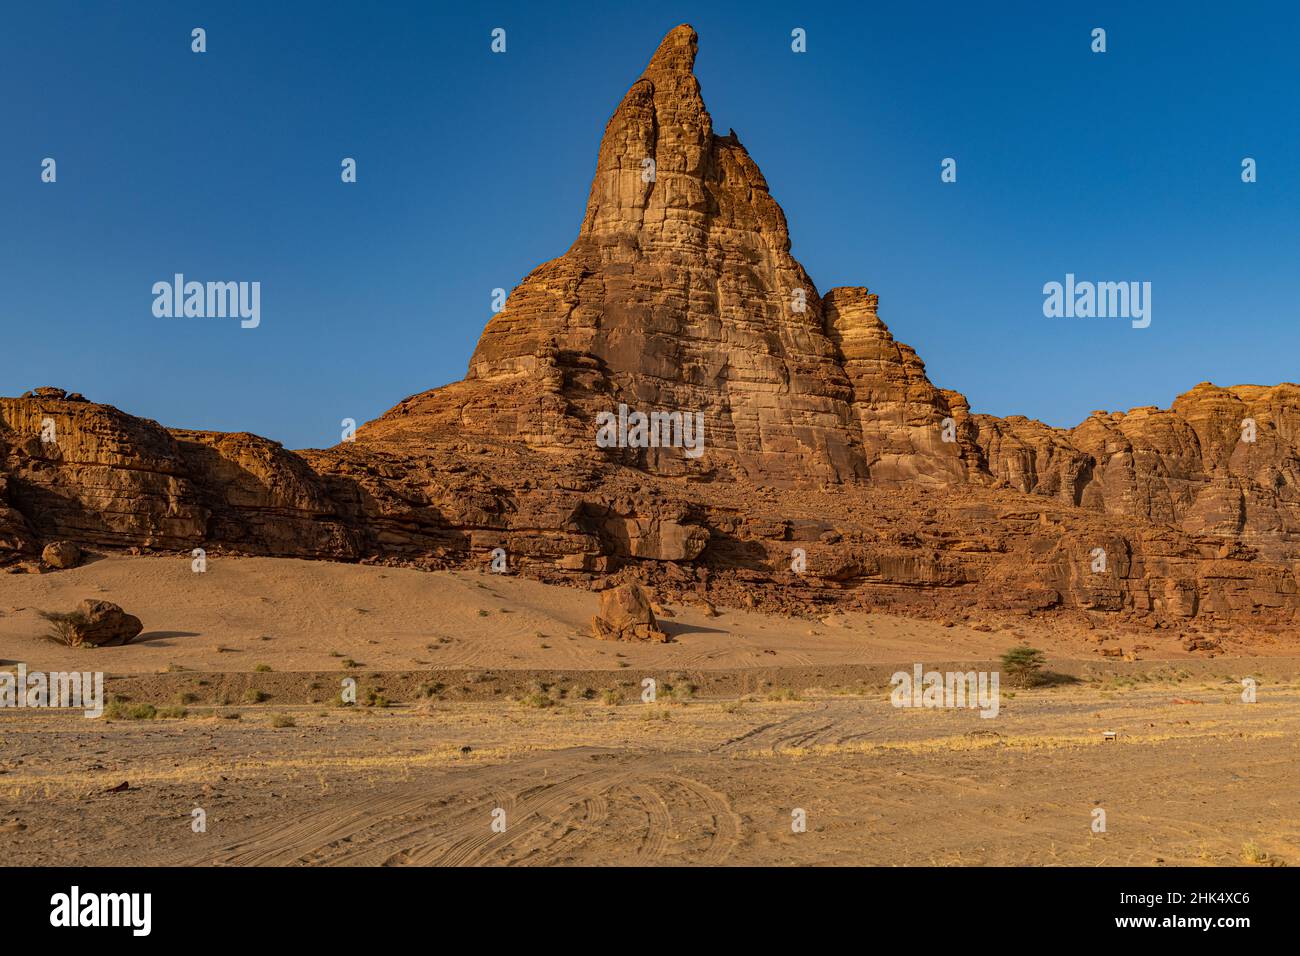 Giant pinnacle, Al Ula, Kingdom of Saudi Arabia, Middle East Stock Photo